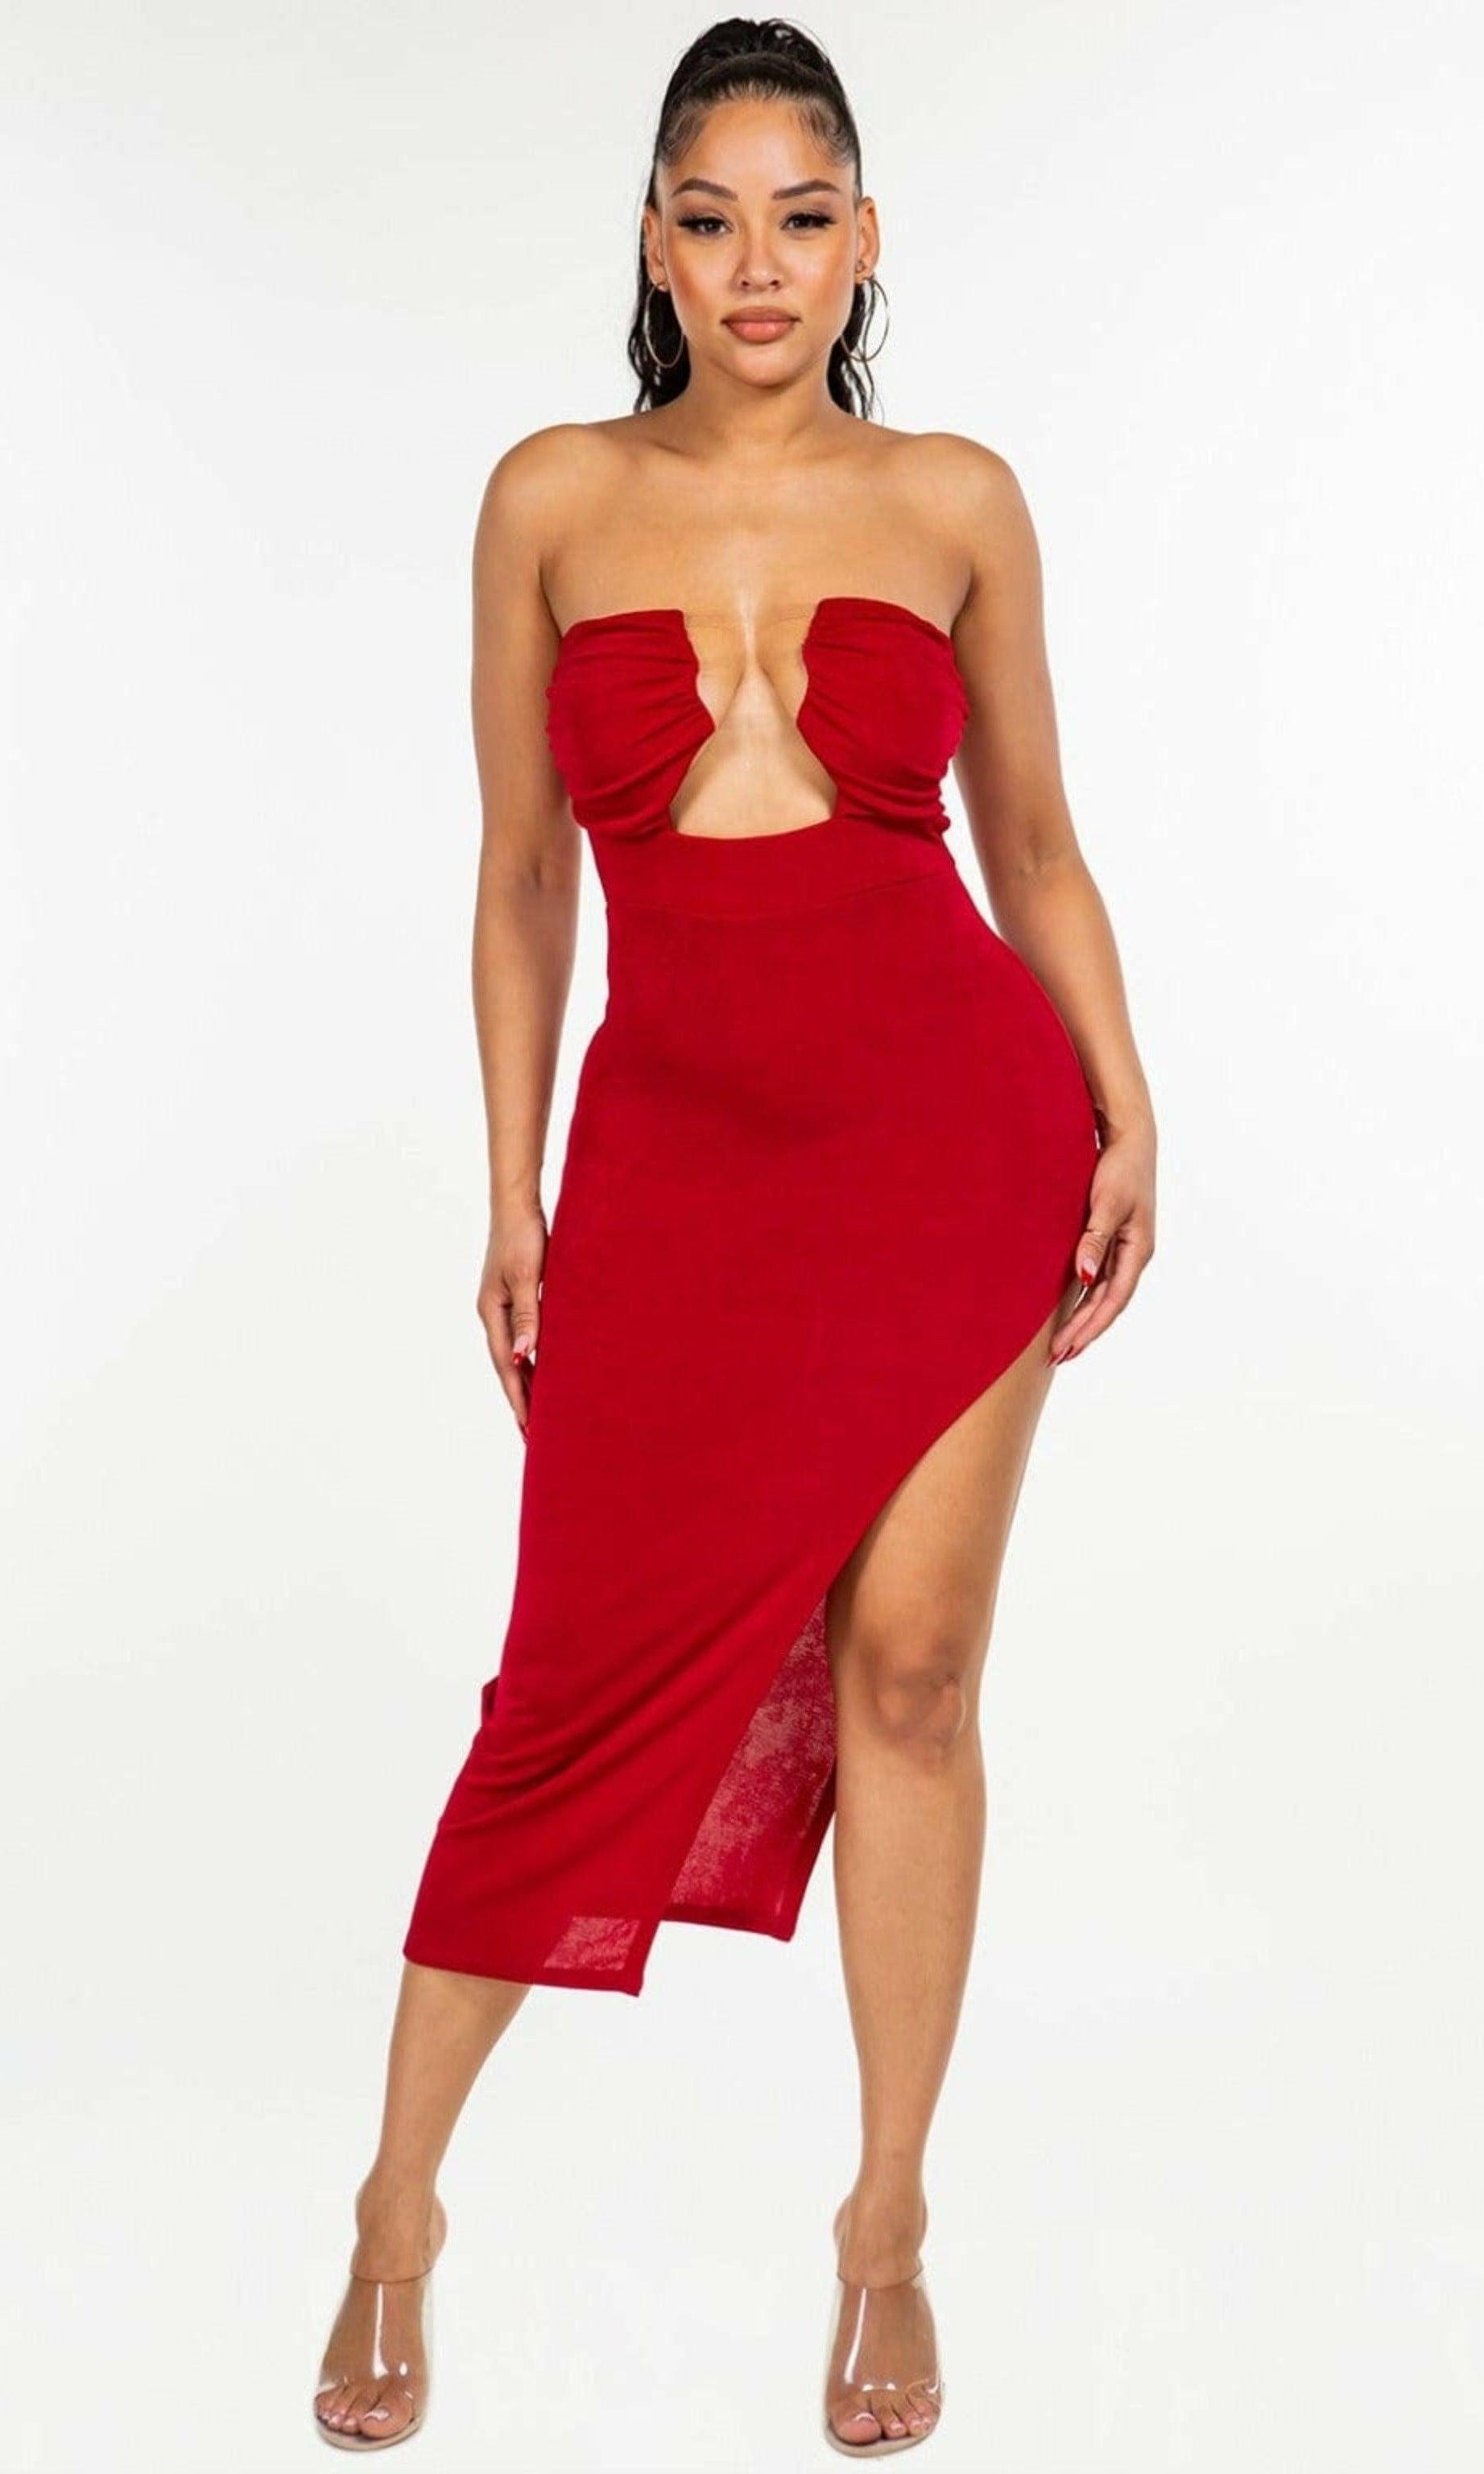 Epicplacess Dress S / RED Slinky Invisible Strap Midi Dress KSD2663